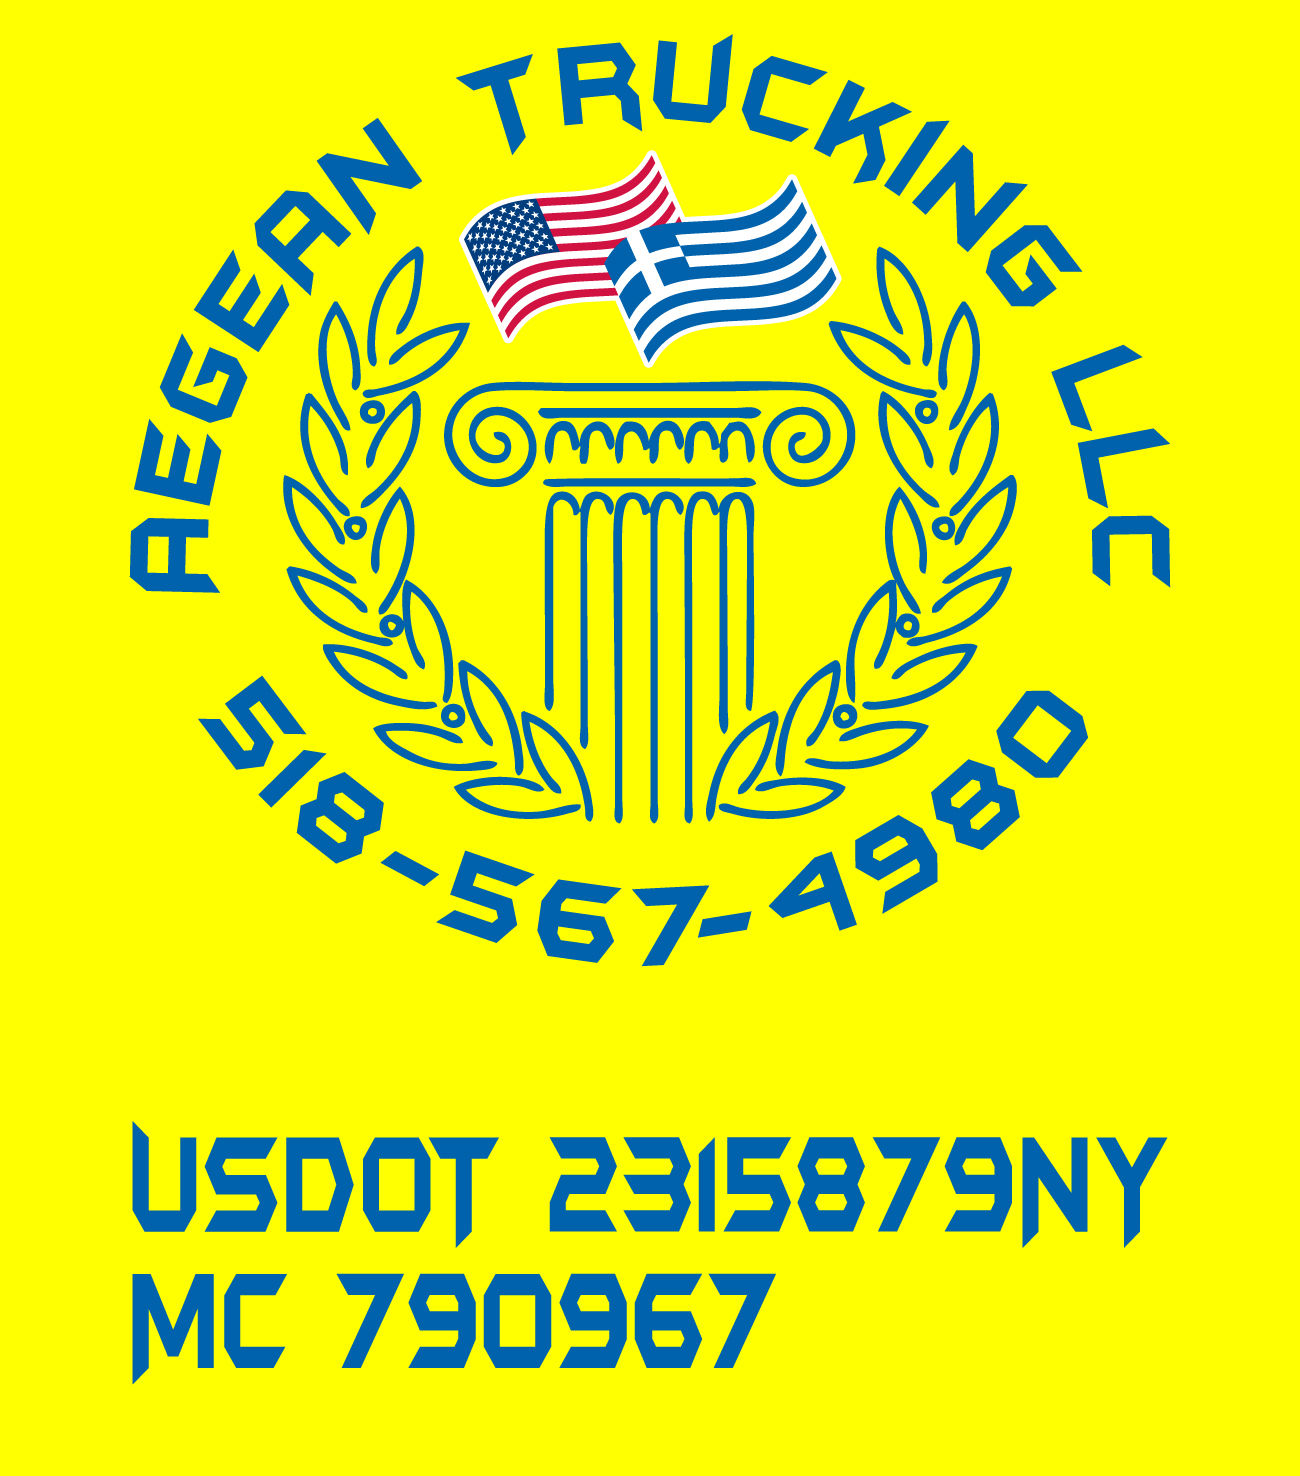 Truck lettering